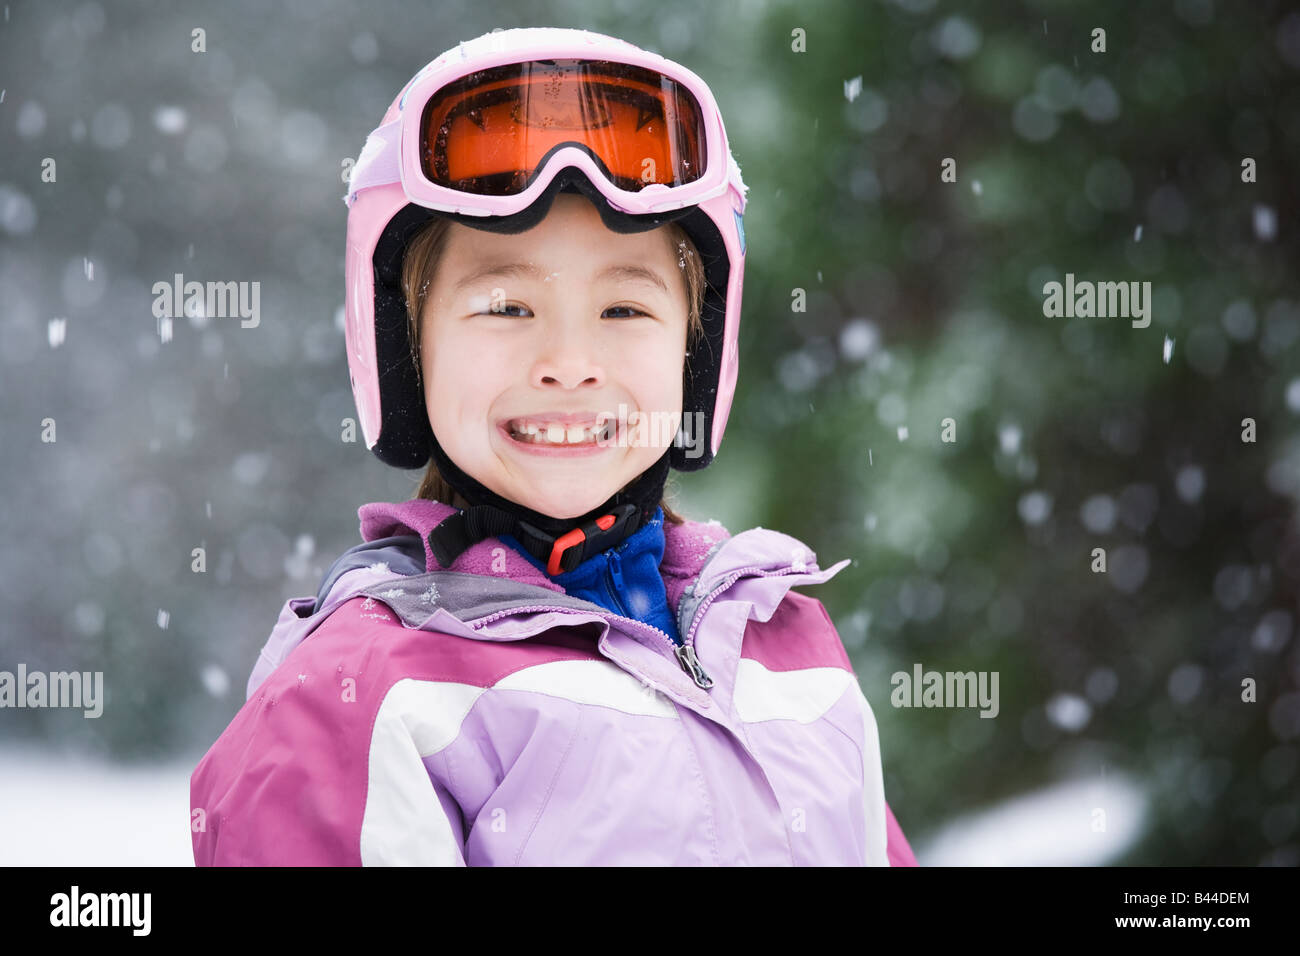 Asian girl wearing ski gear in snow Stock Photo